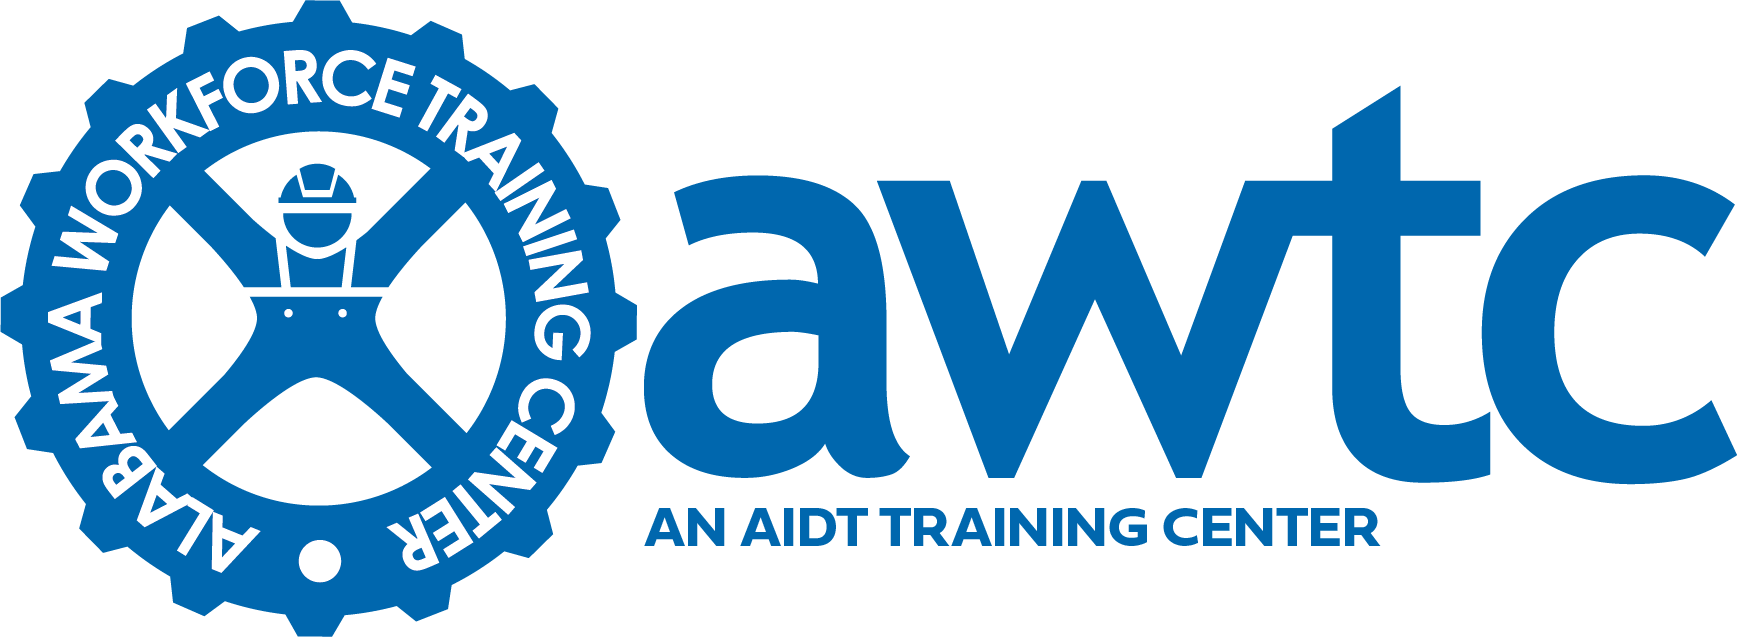 Alabama Workforce Training Center - Logo